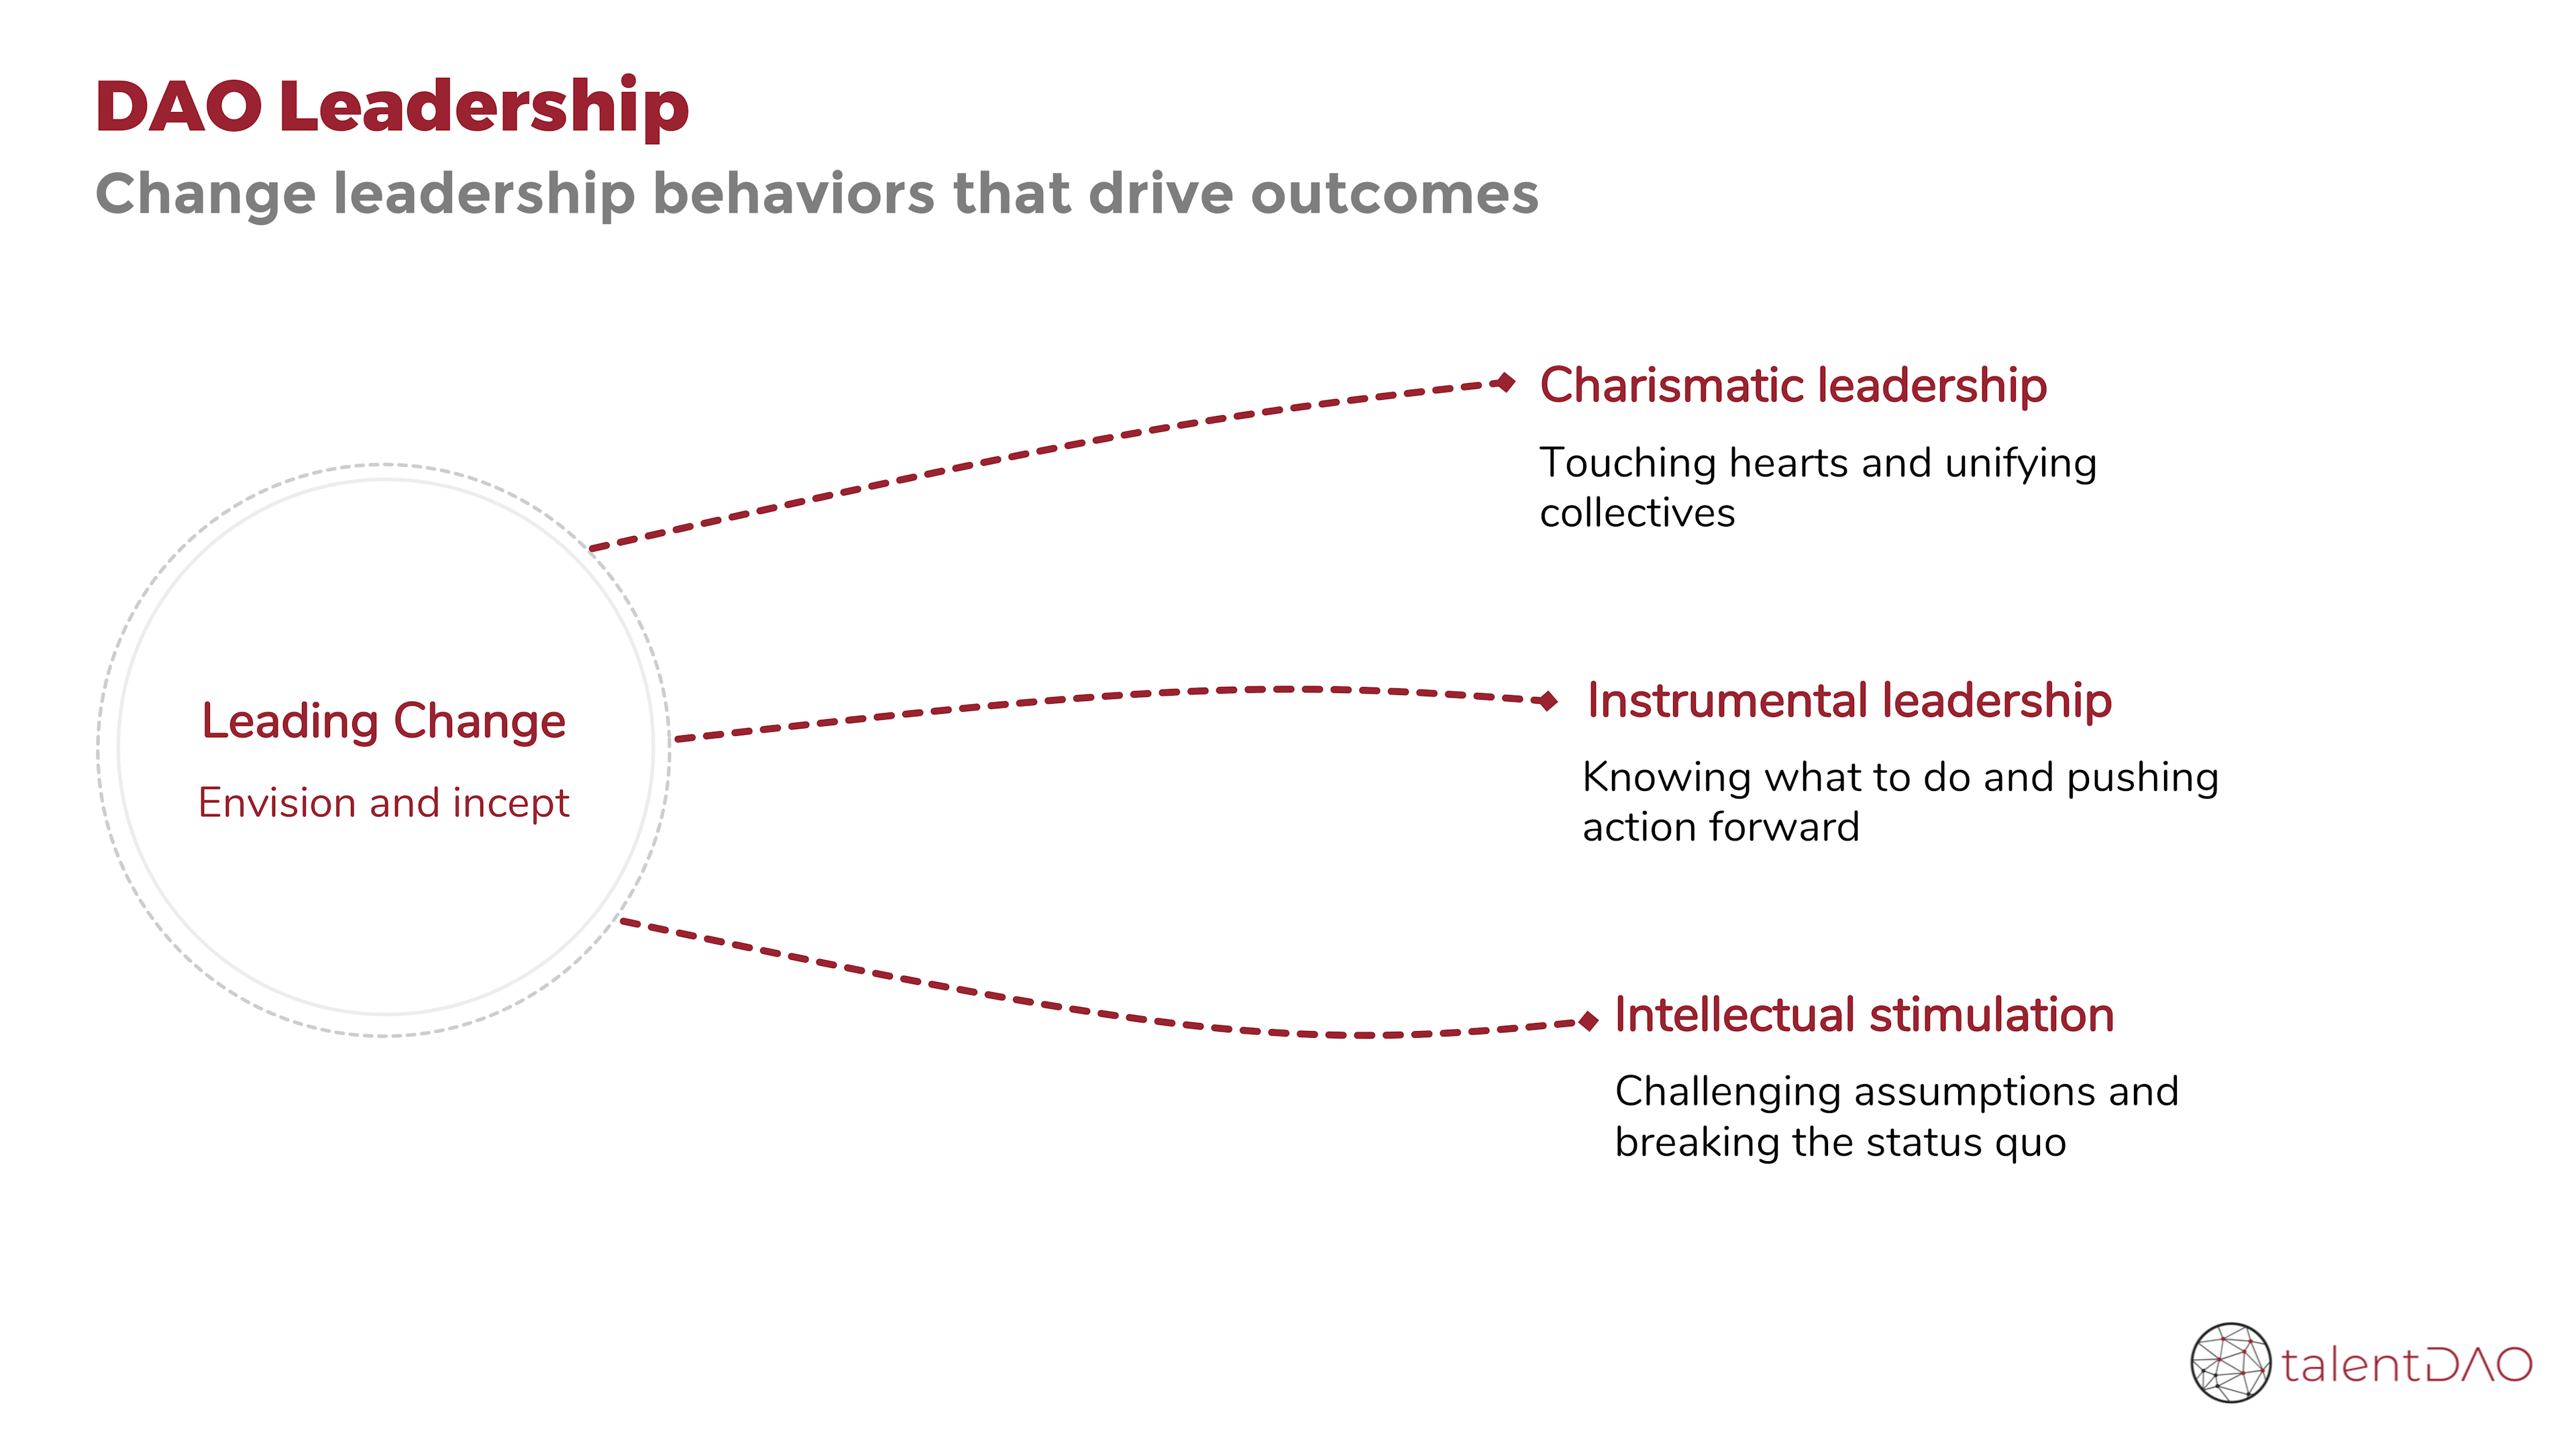 Change leadership behaviors that drive outcomes